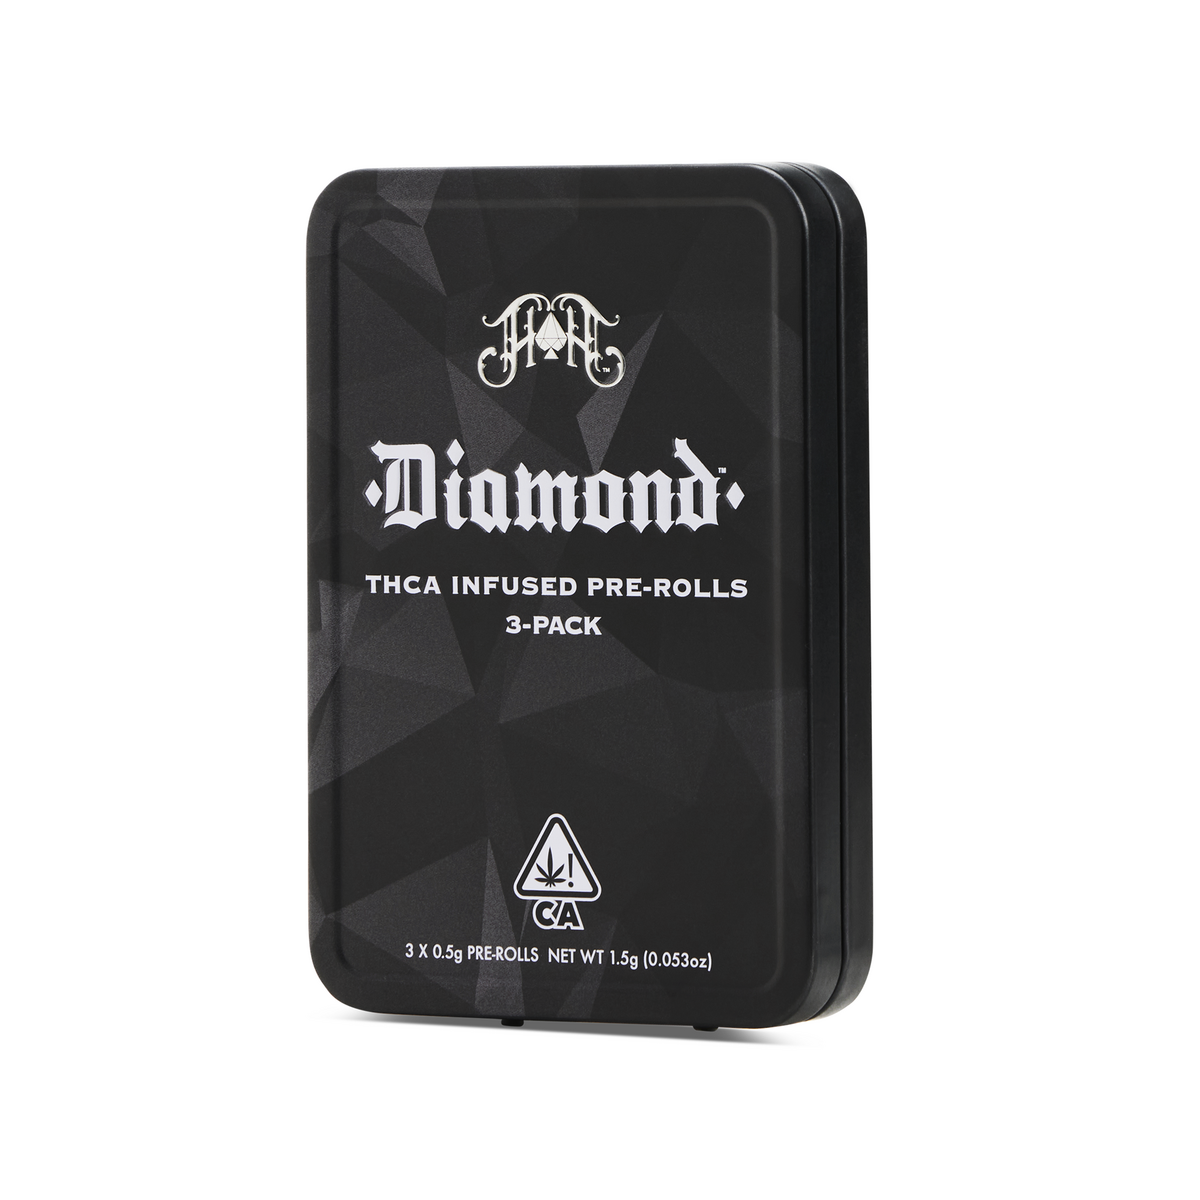 Vanilla Kush | Indica - Diamond THCA-Infused Pre-Rolls - 1.5G Three-Pack